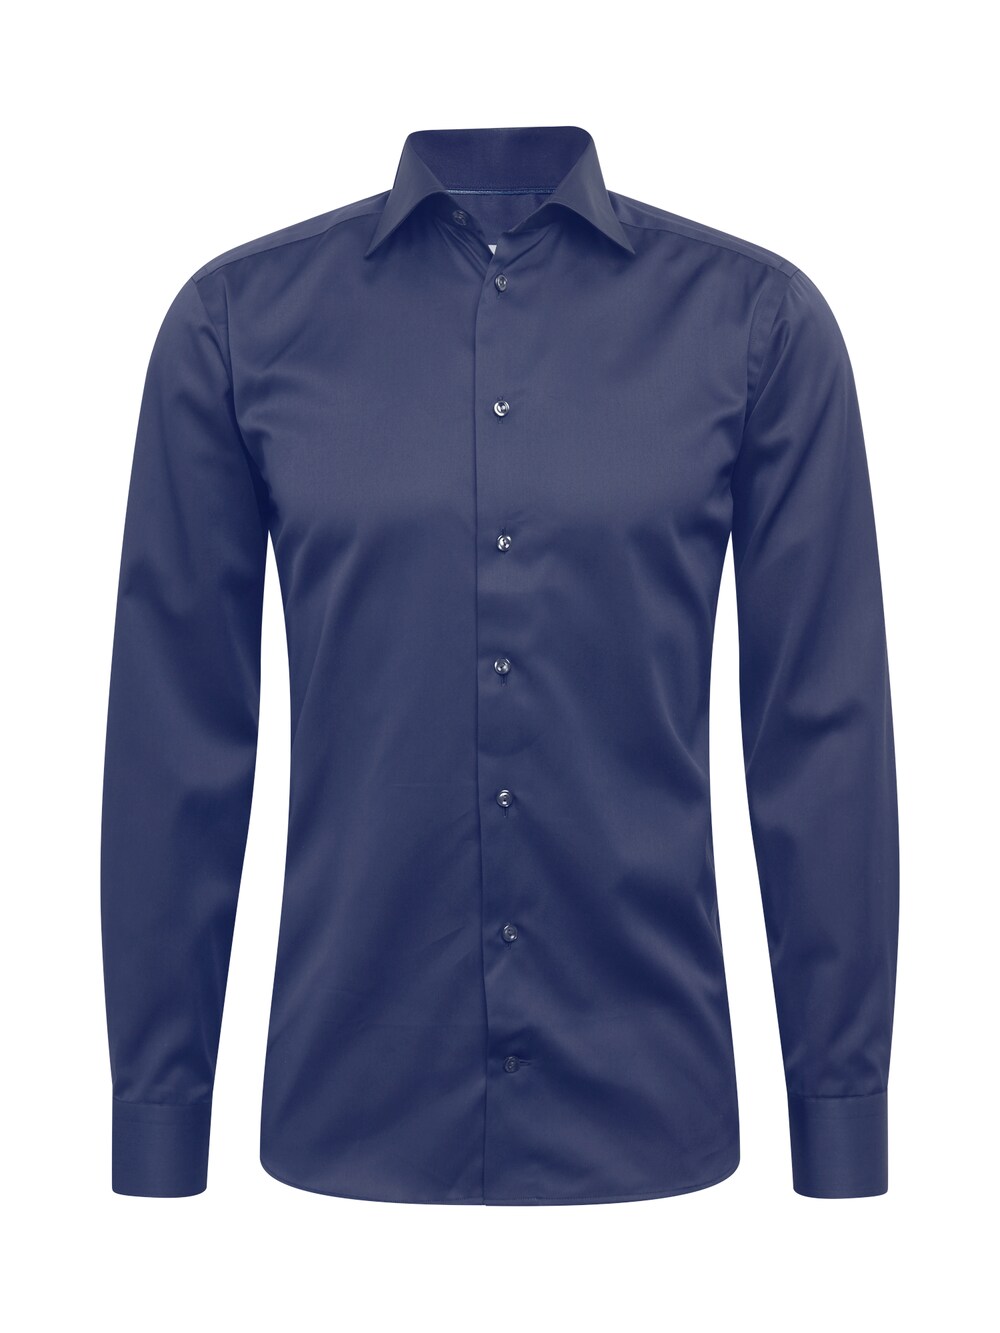 Деловая рубашка узкого кроя ETON Signature Twill, темно-синий